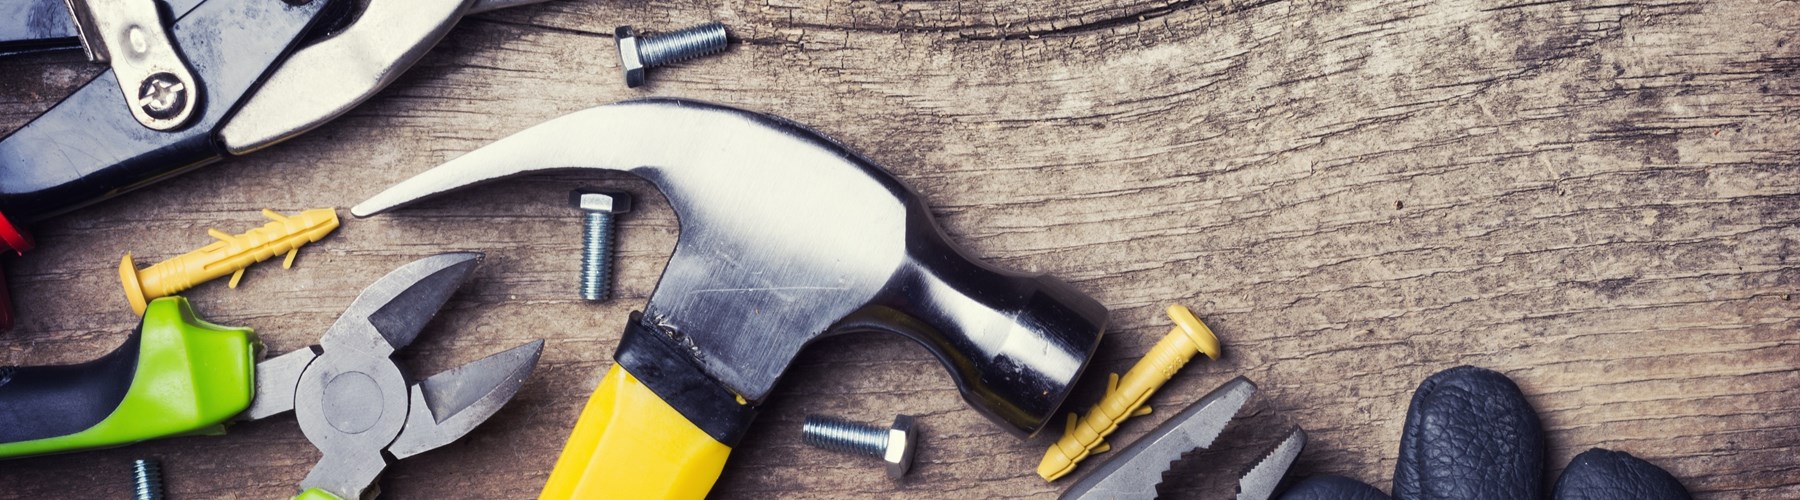 Handyman tools scattered across wood flooring 